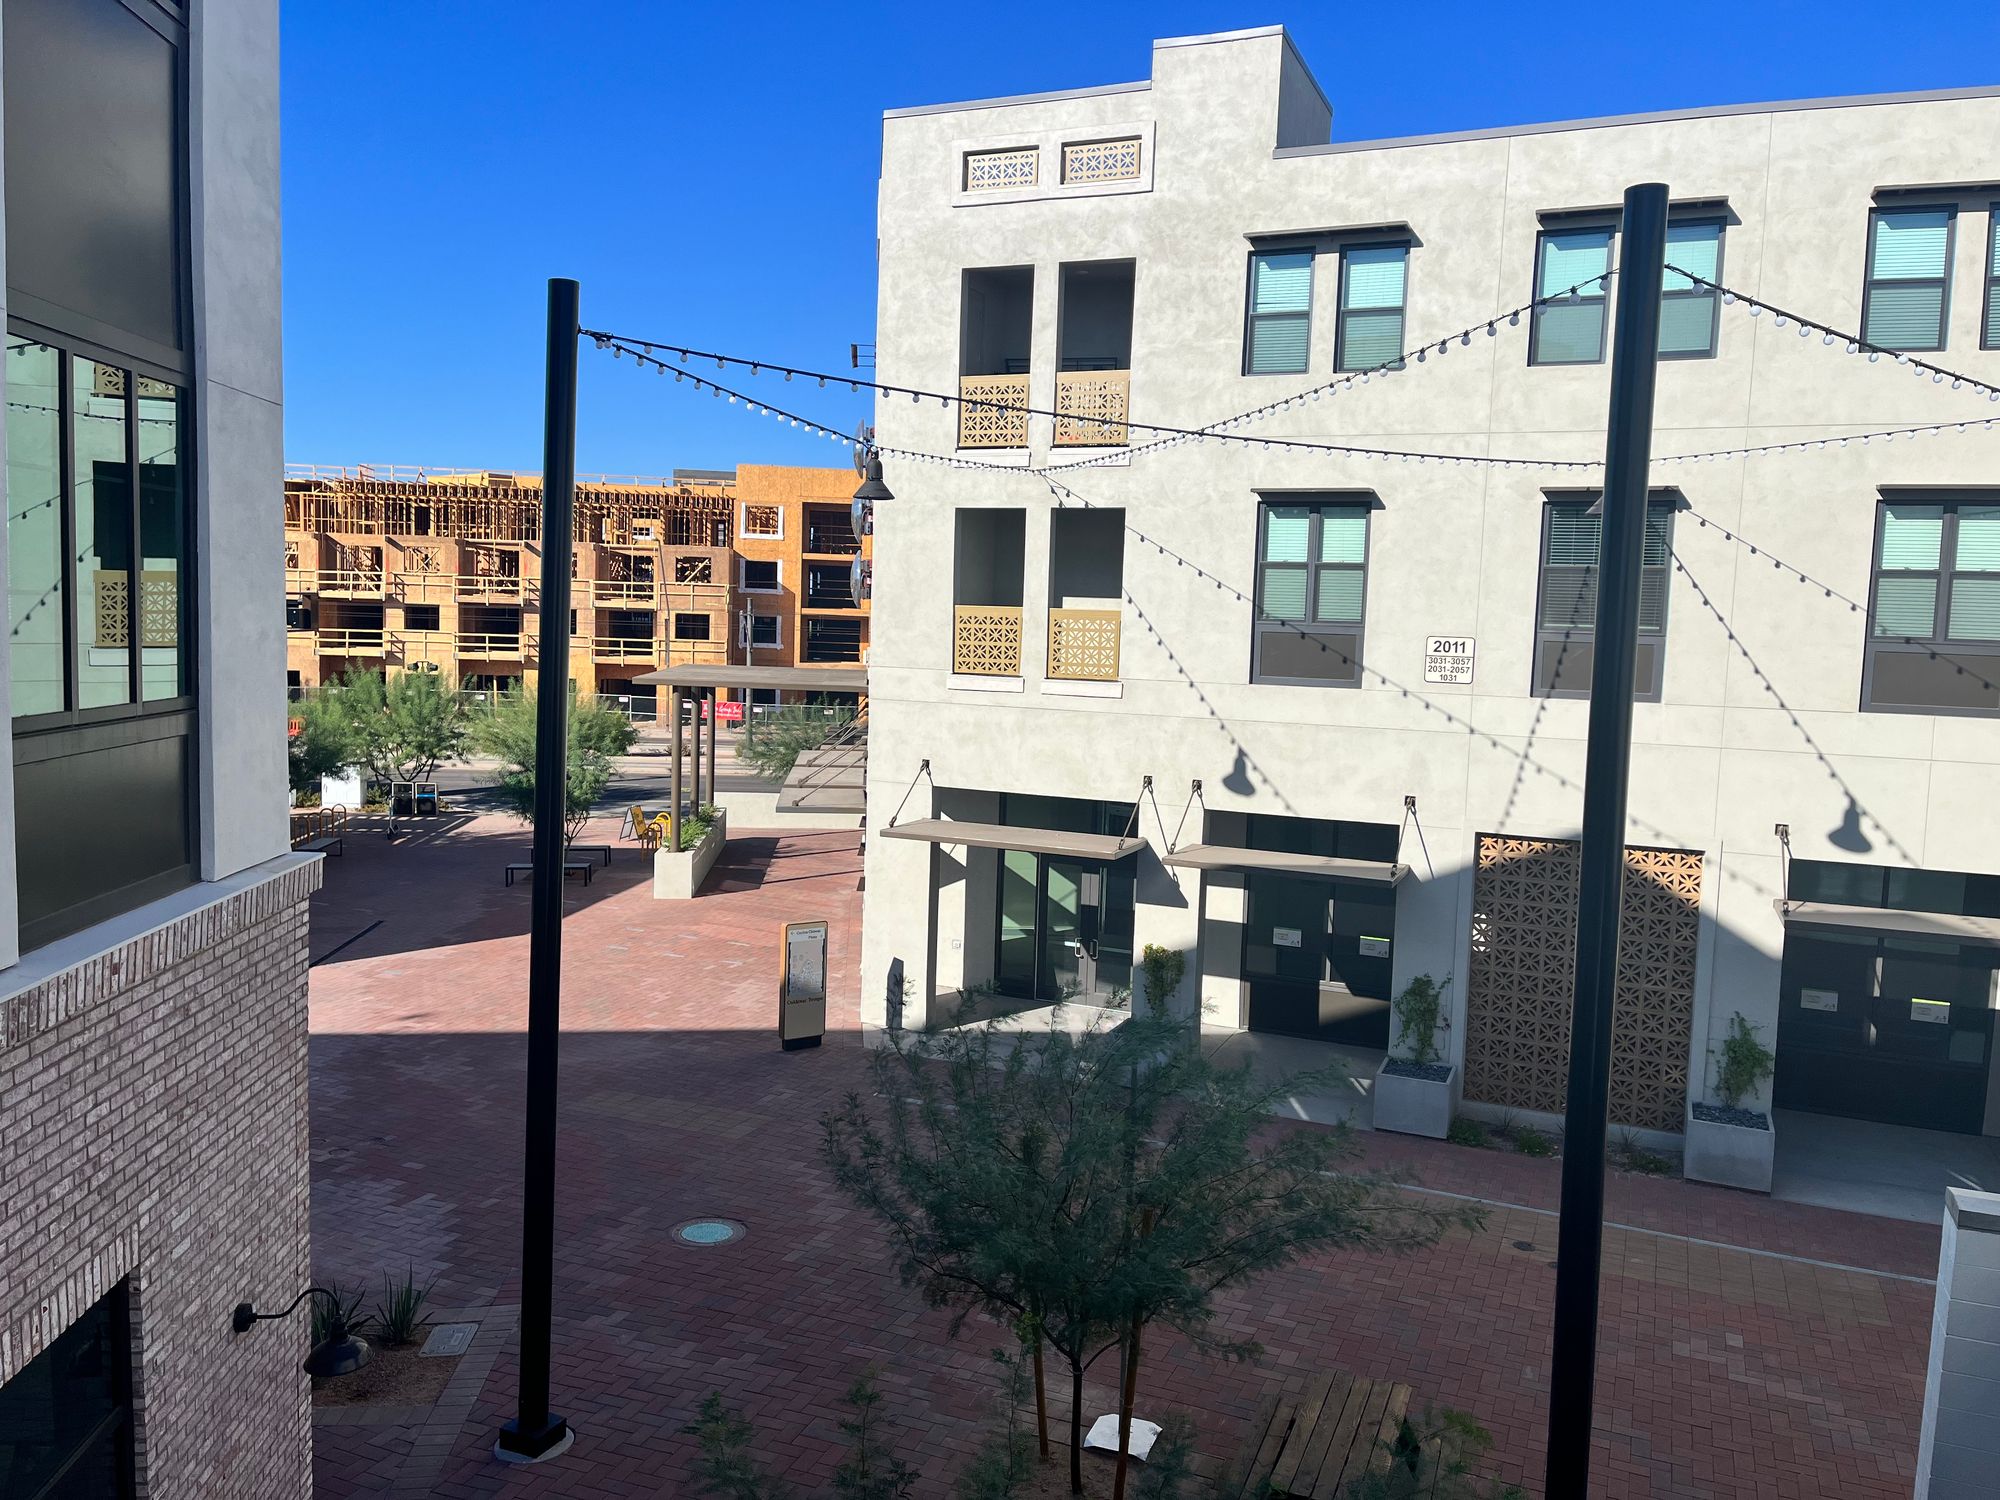 A tour of Culdesac: the car-free community in Tempe, Arizona